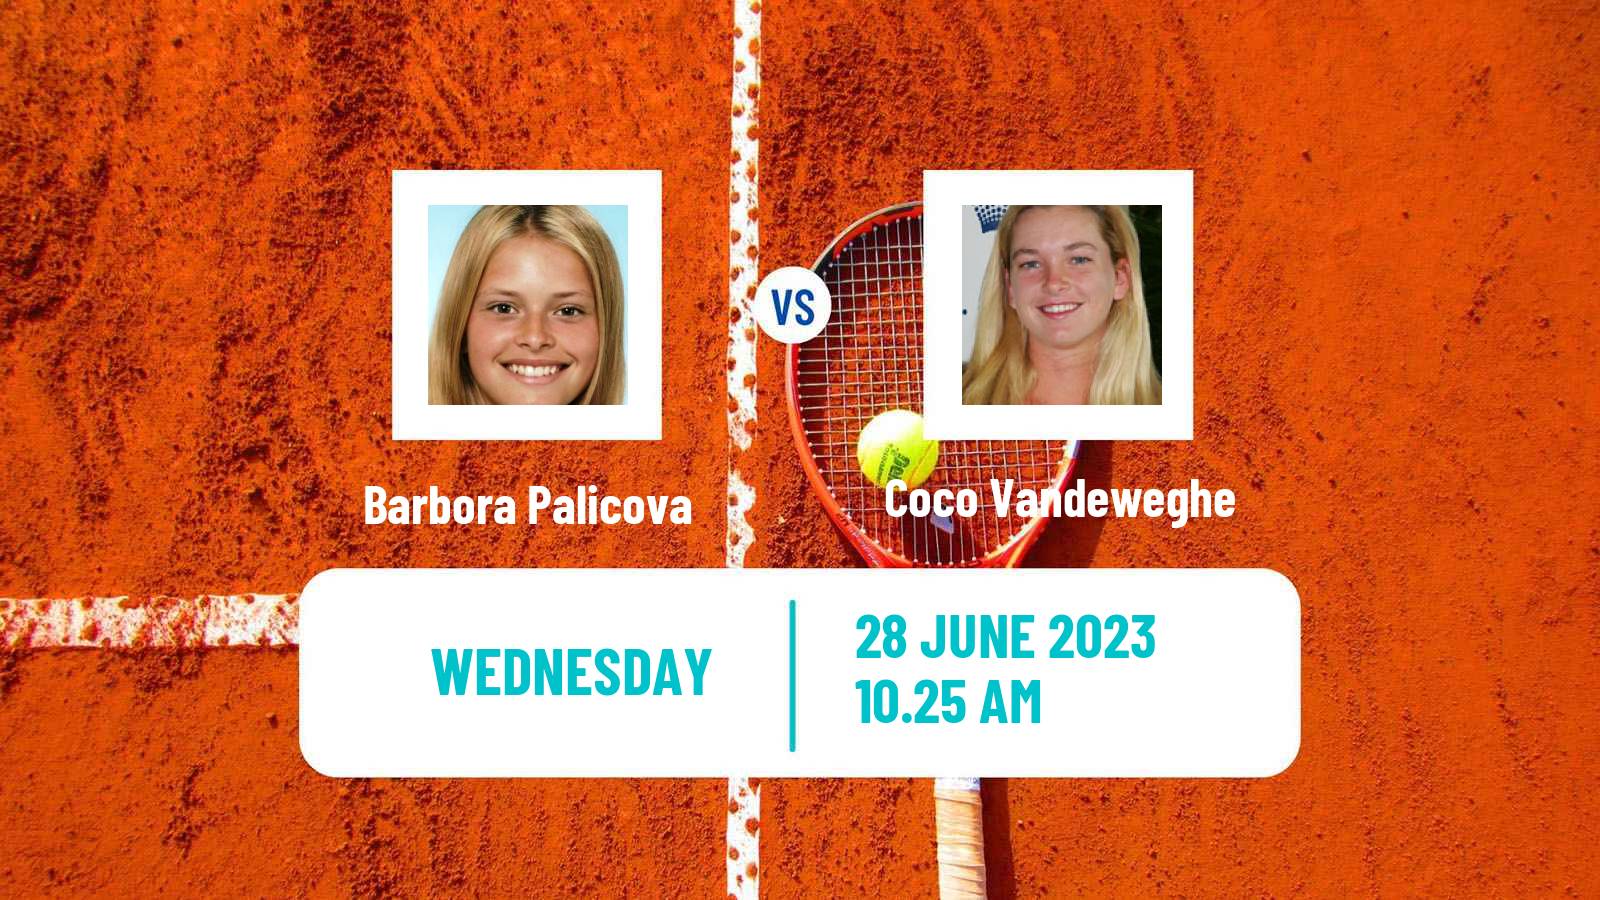 Tennis WTA Wimbledon Barbora Palicova - Coco Vandeweghe